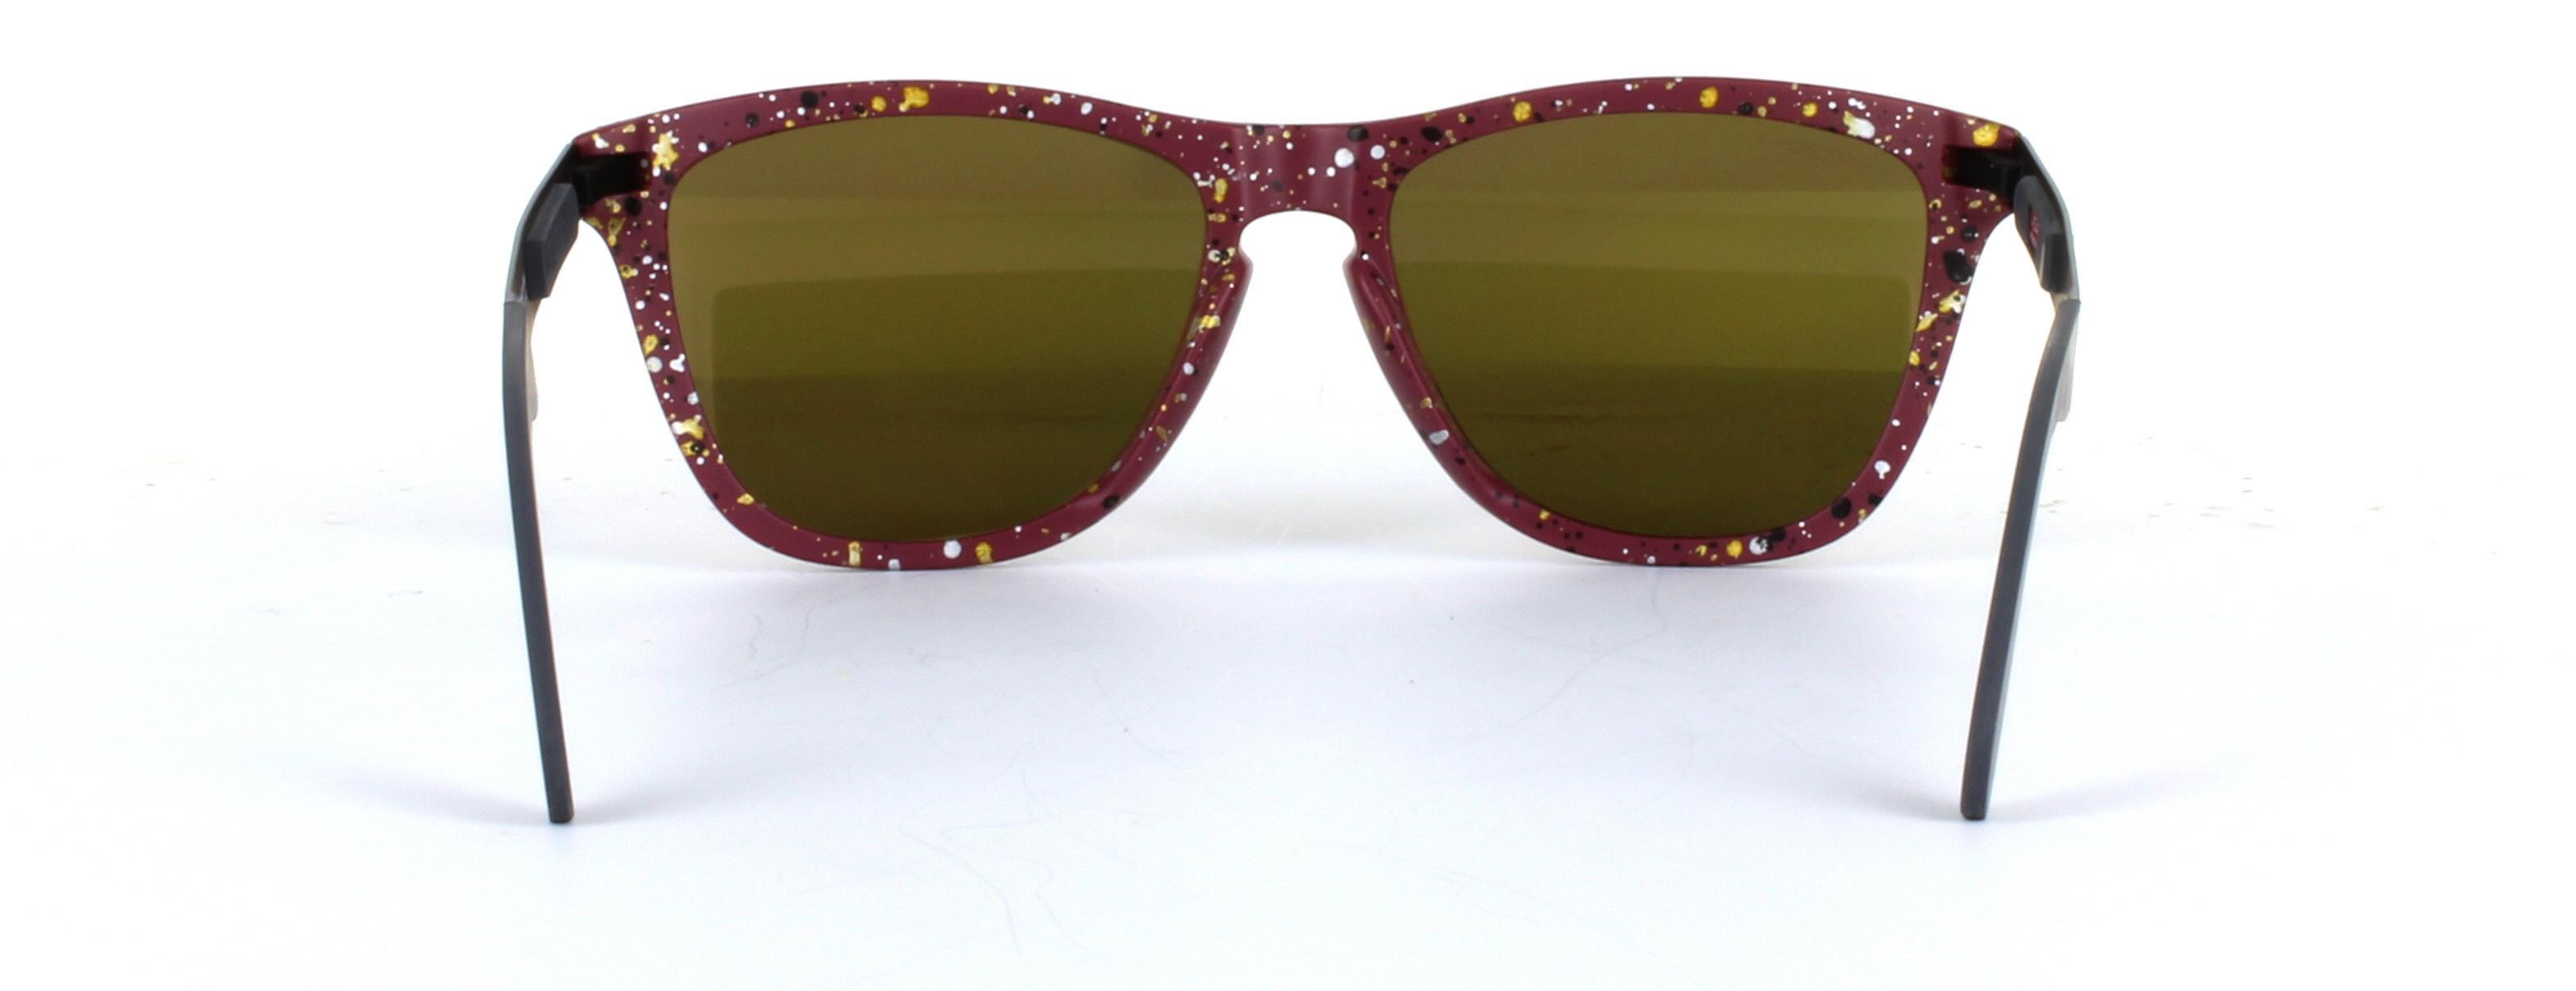 Oakley (O9428) Red Full Rim Rectangular Plastic Prescription Sunglasses - Image View 3